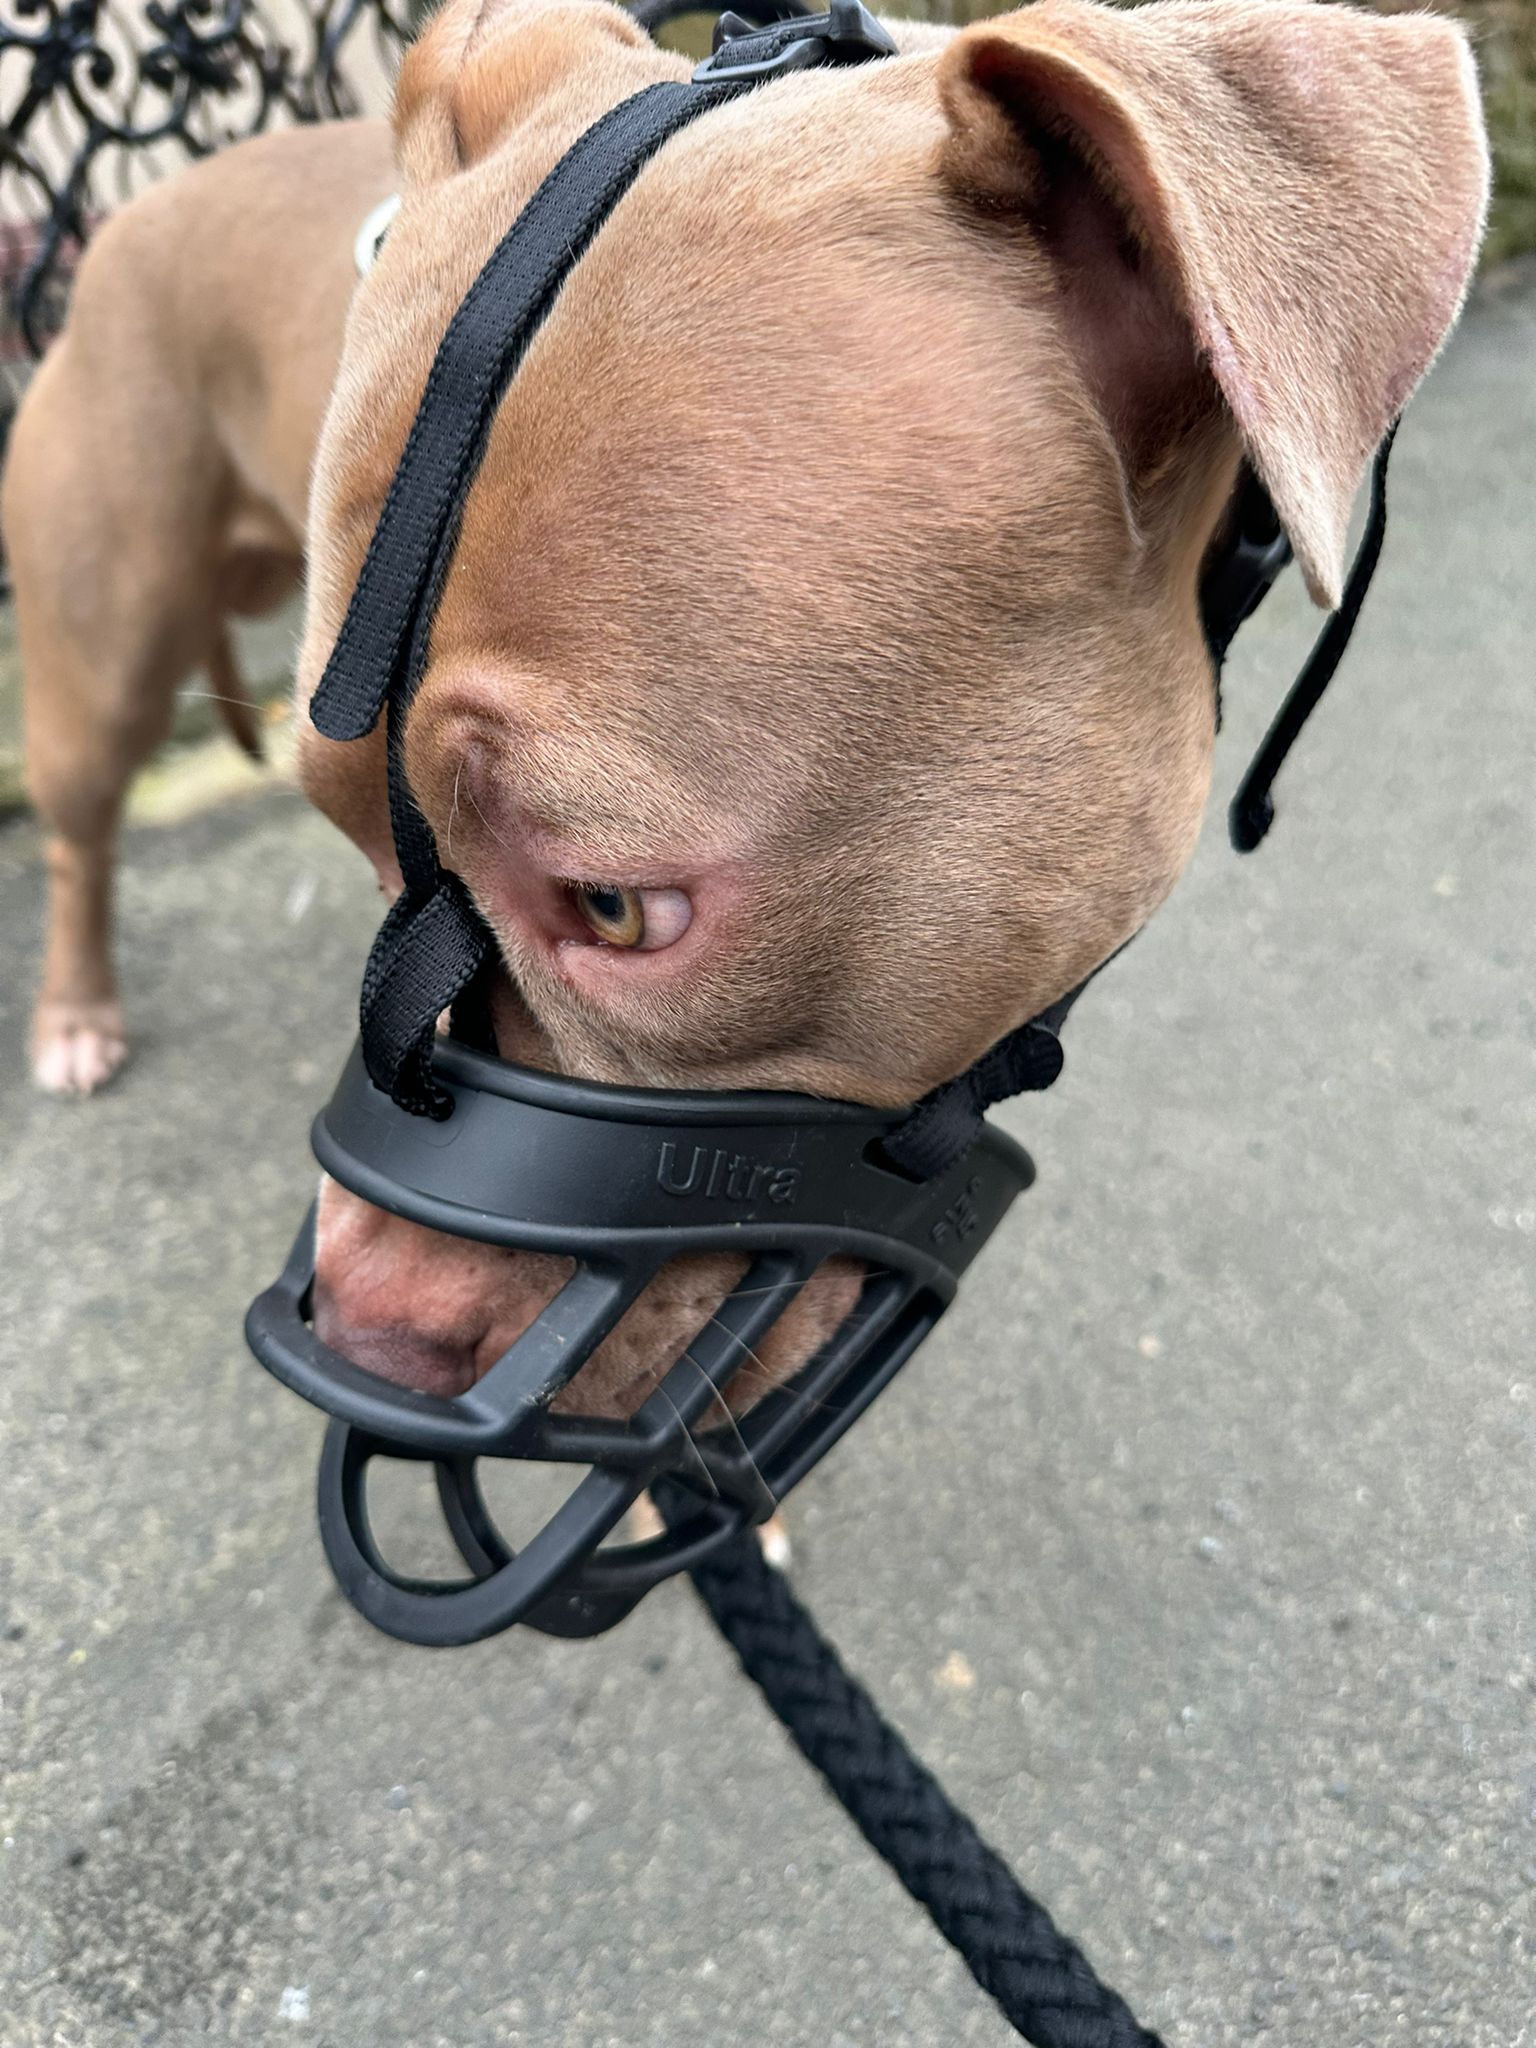 An XL bully wearing a muzzle 